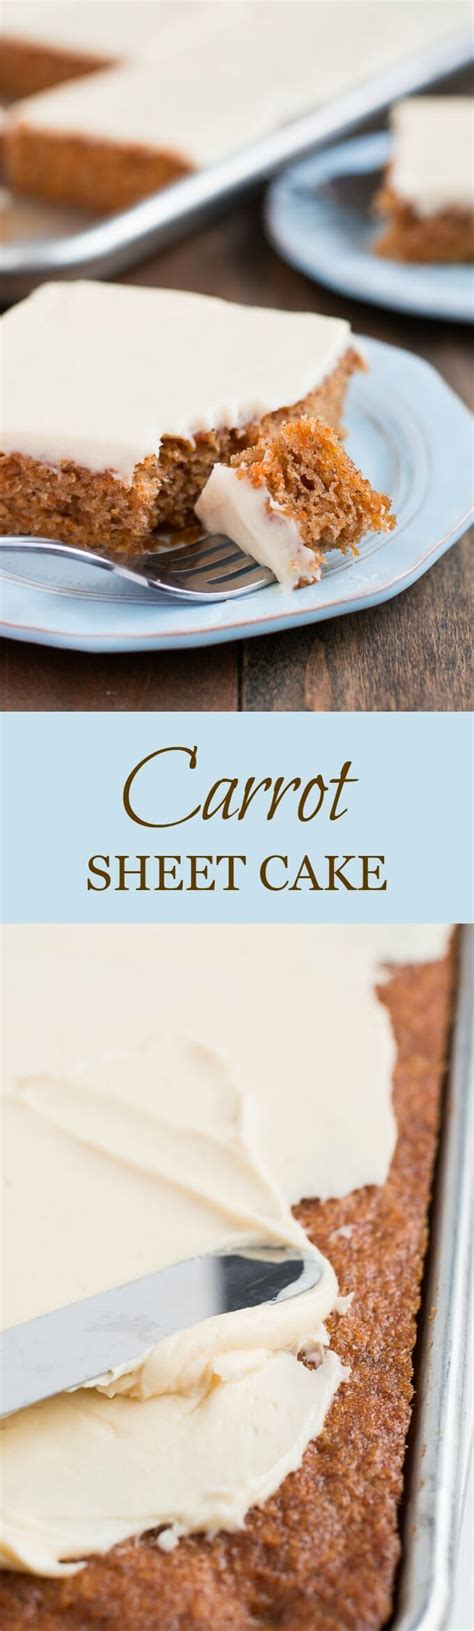 Carrot Sheet Cake Garnish And Glaze Recipe Desserts Cake Recipes